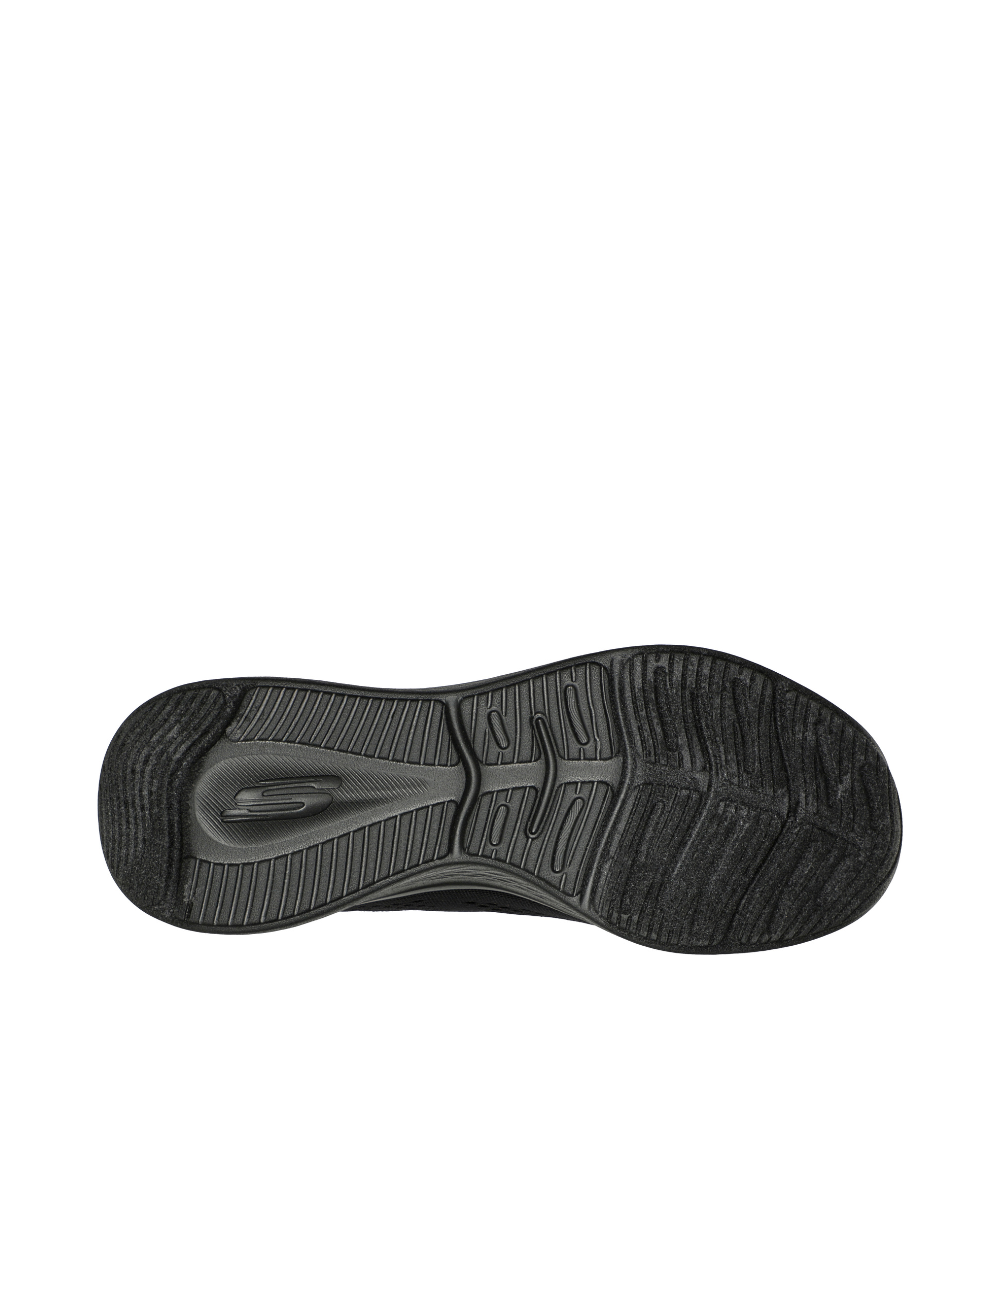 SKCHERS SKECH-LITE PRO 149991  Zapatillas deportivas negras mujer